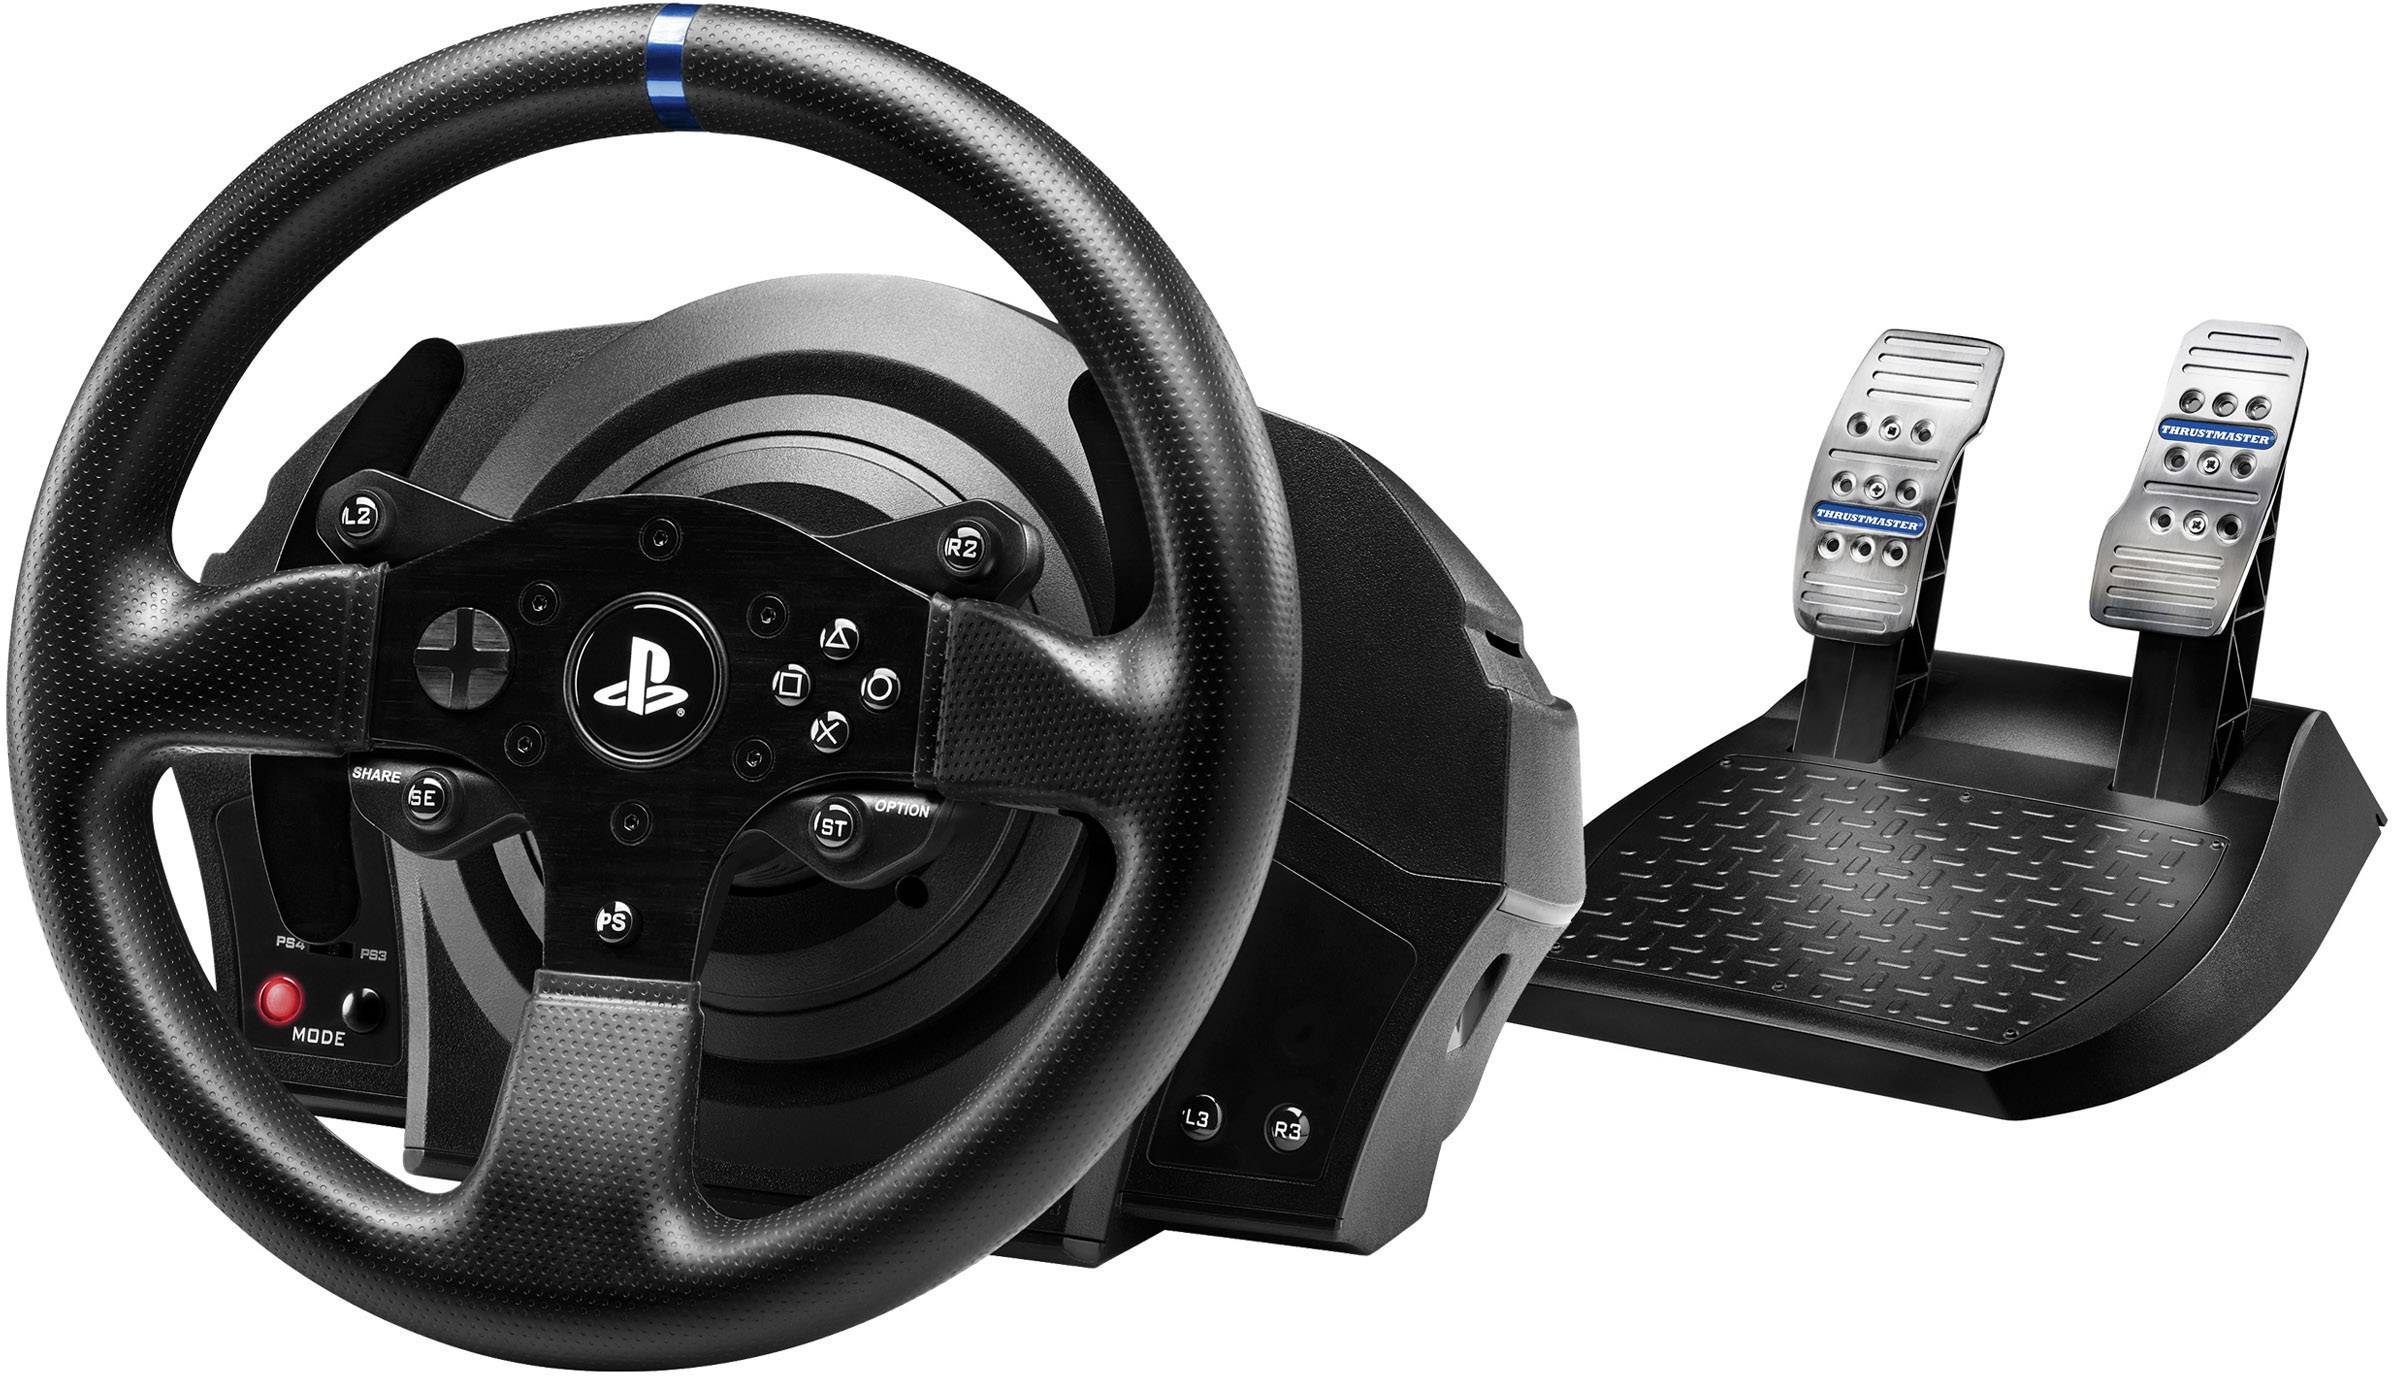 jeans build Rige Thrustmaster T300 RS Racing Wheel Rat PlayStation 4, PlayStation 3, PC Sort  | Conradelektronik.dk